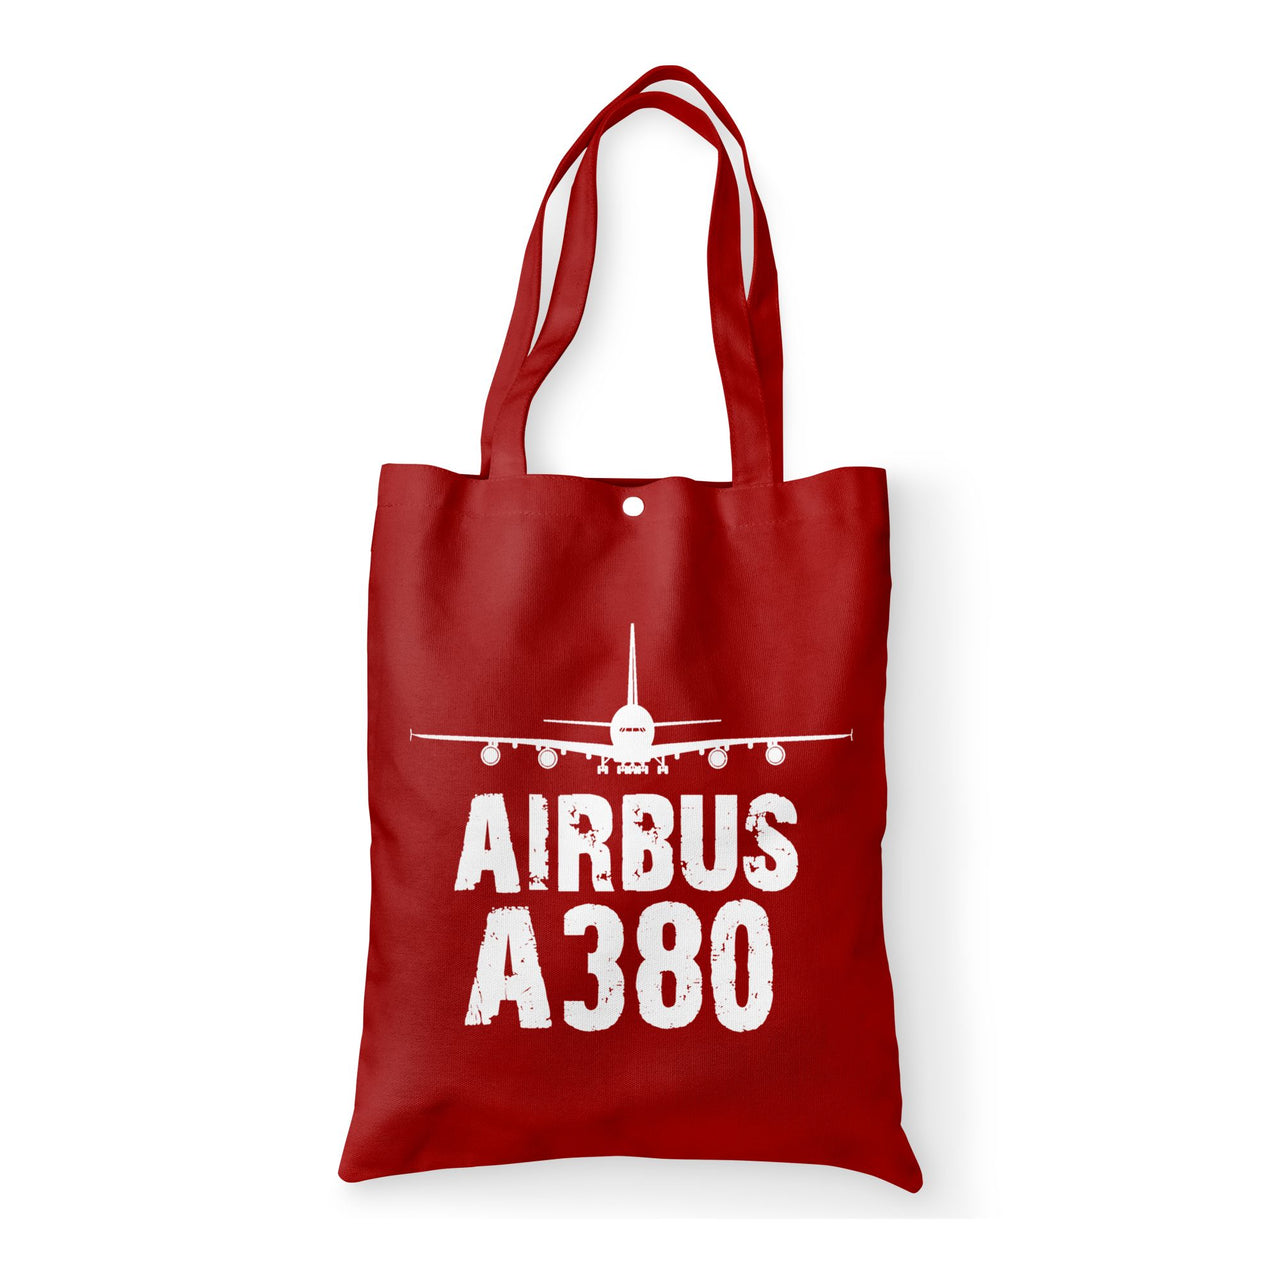 Airbus A380 & Plane Designed Tote Bags